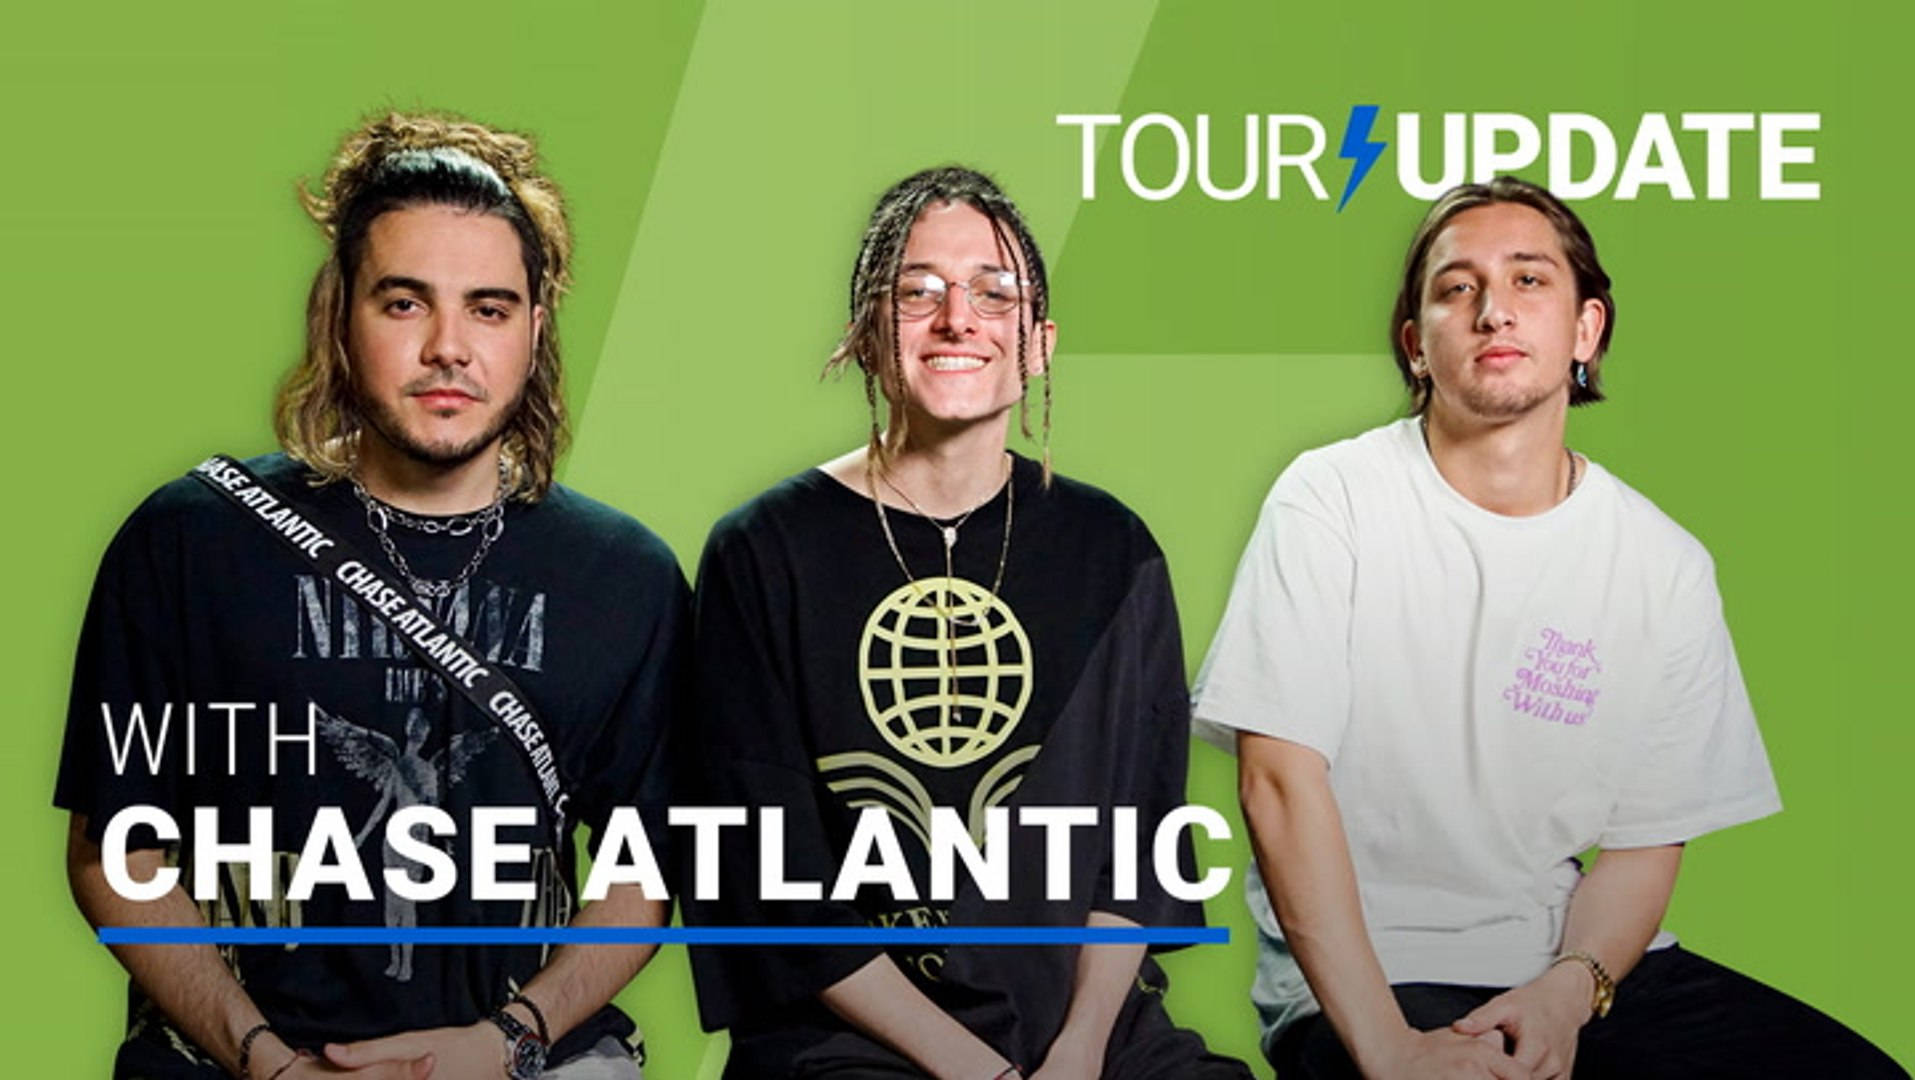 Chase Atlantic Tour Update Wallpaper